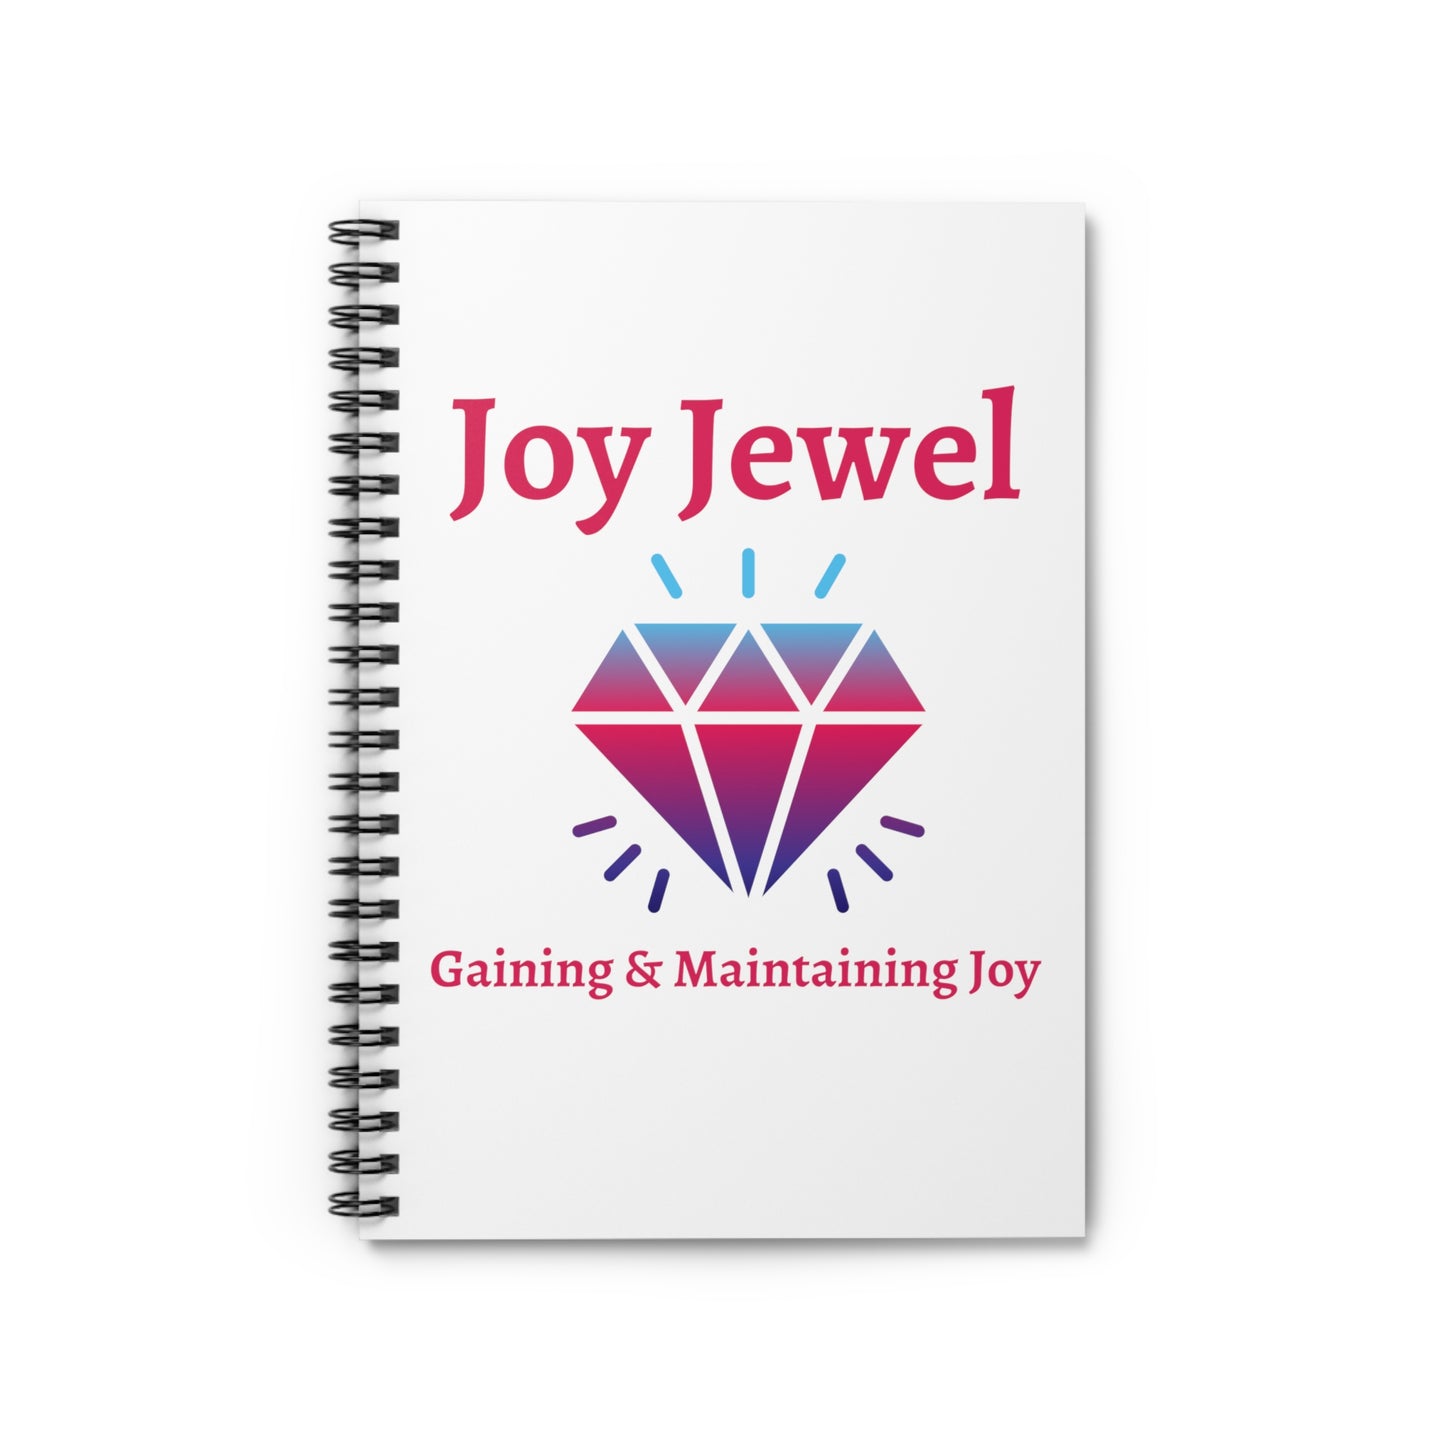 Joy Jewel Spiral Notebook - Ruled Line